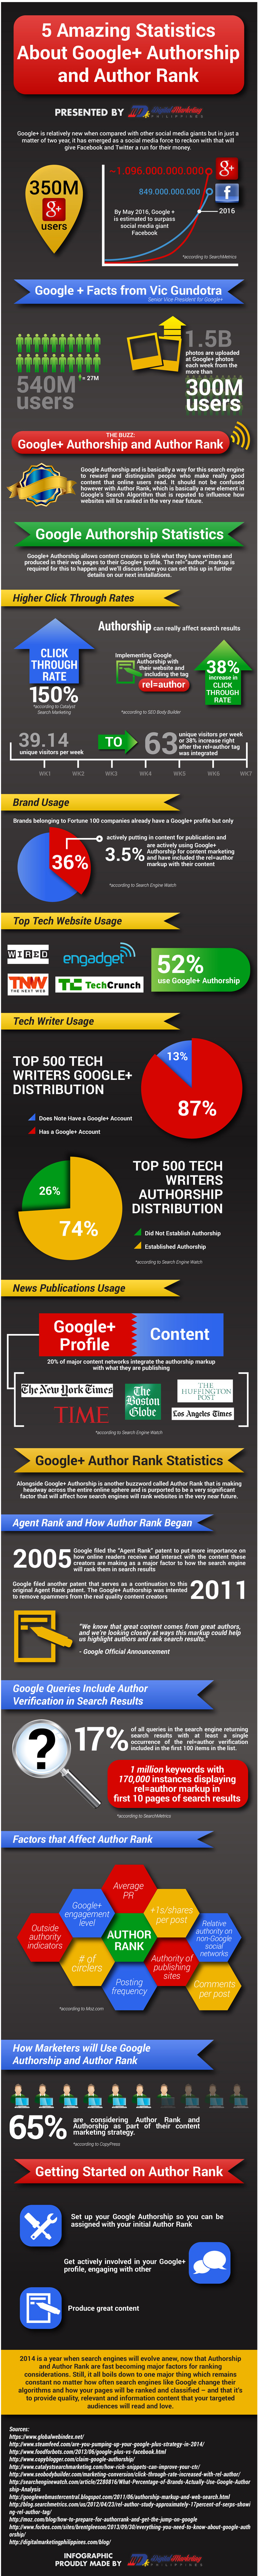 5-Amazing-Statistics-About-Google-Plus-Authorship-and-Author-Rank